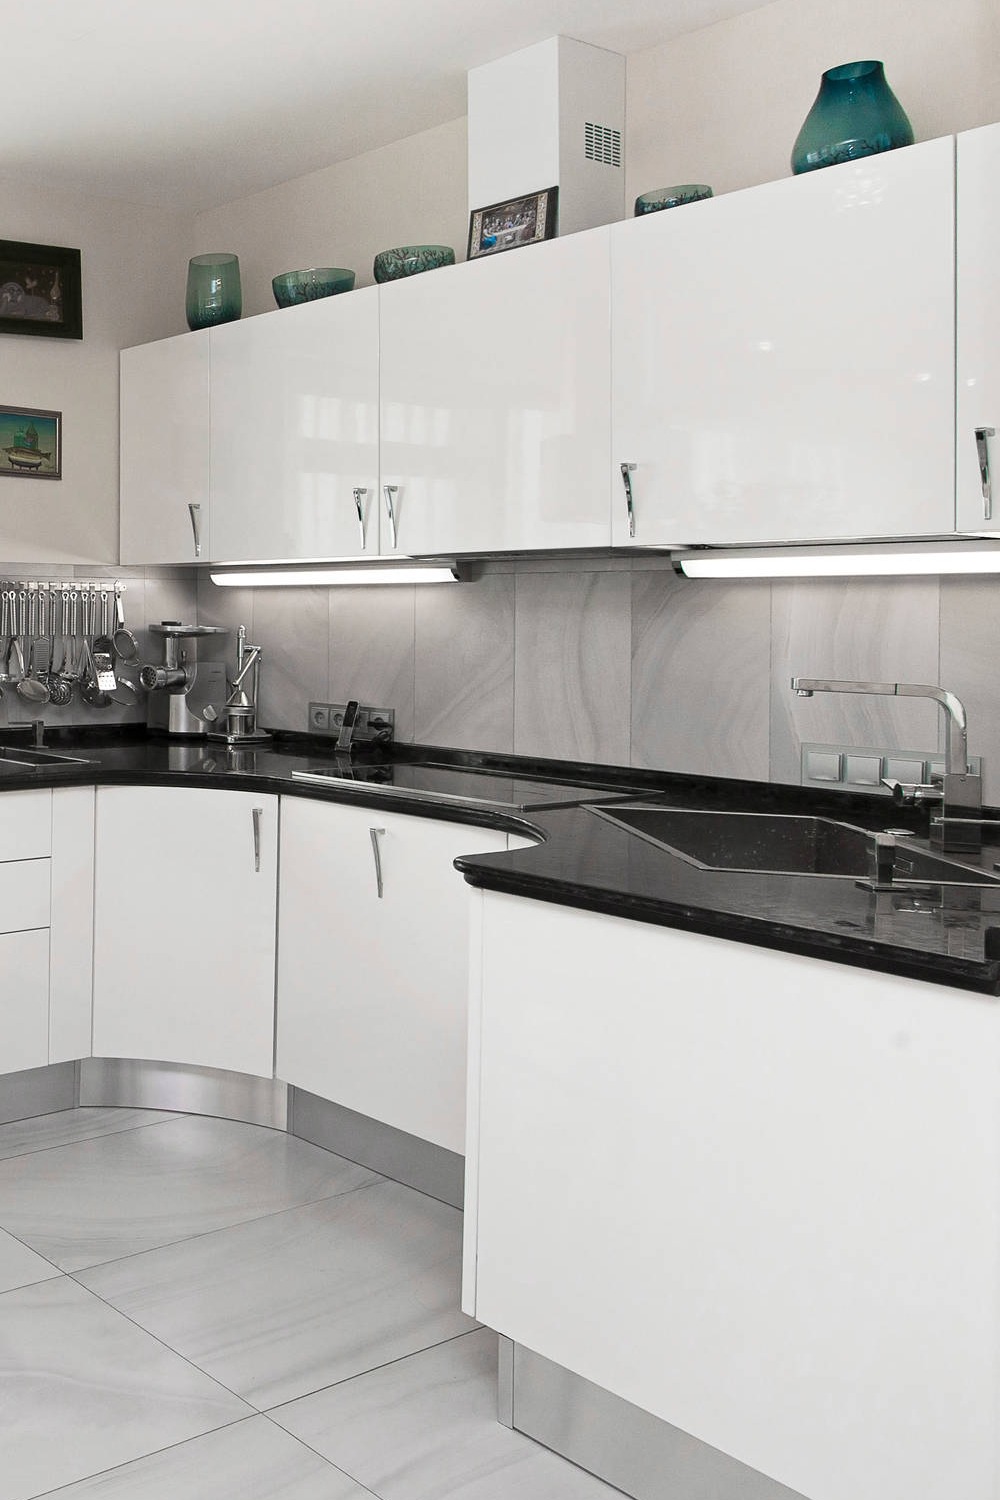 Kitchen Remodel Black Granite Countertops White Combination Black Range Hood Gray Backsplash Natural Light Cabinets With Black Hood